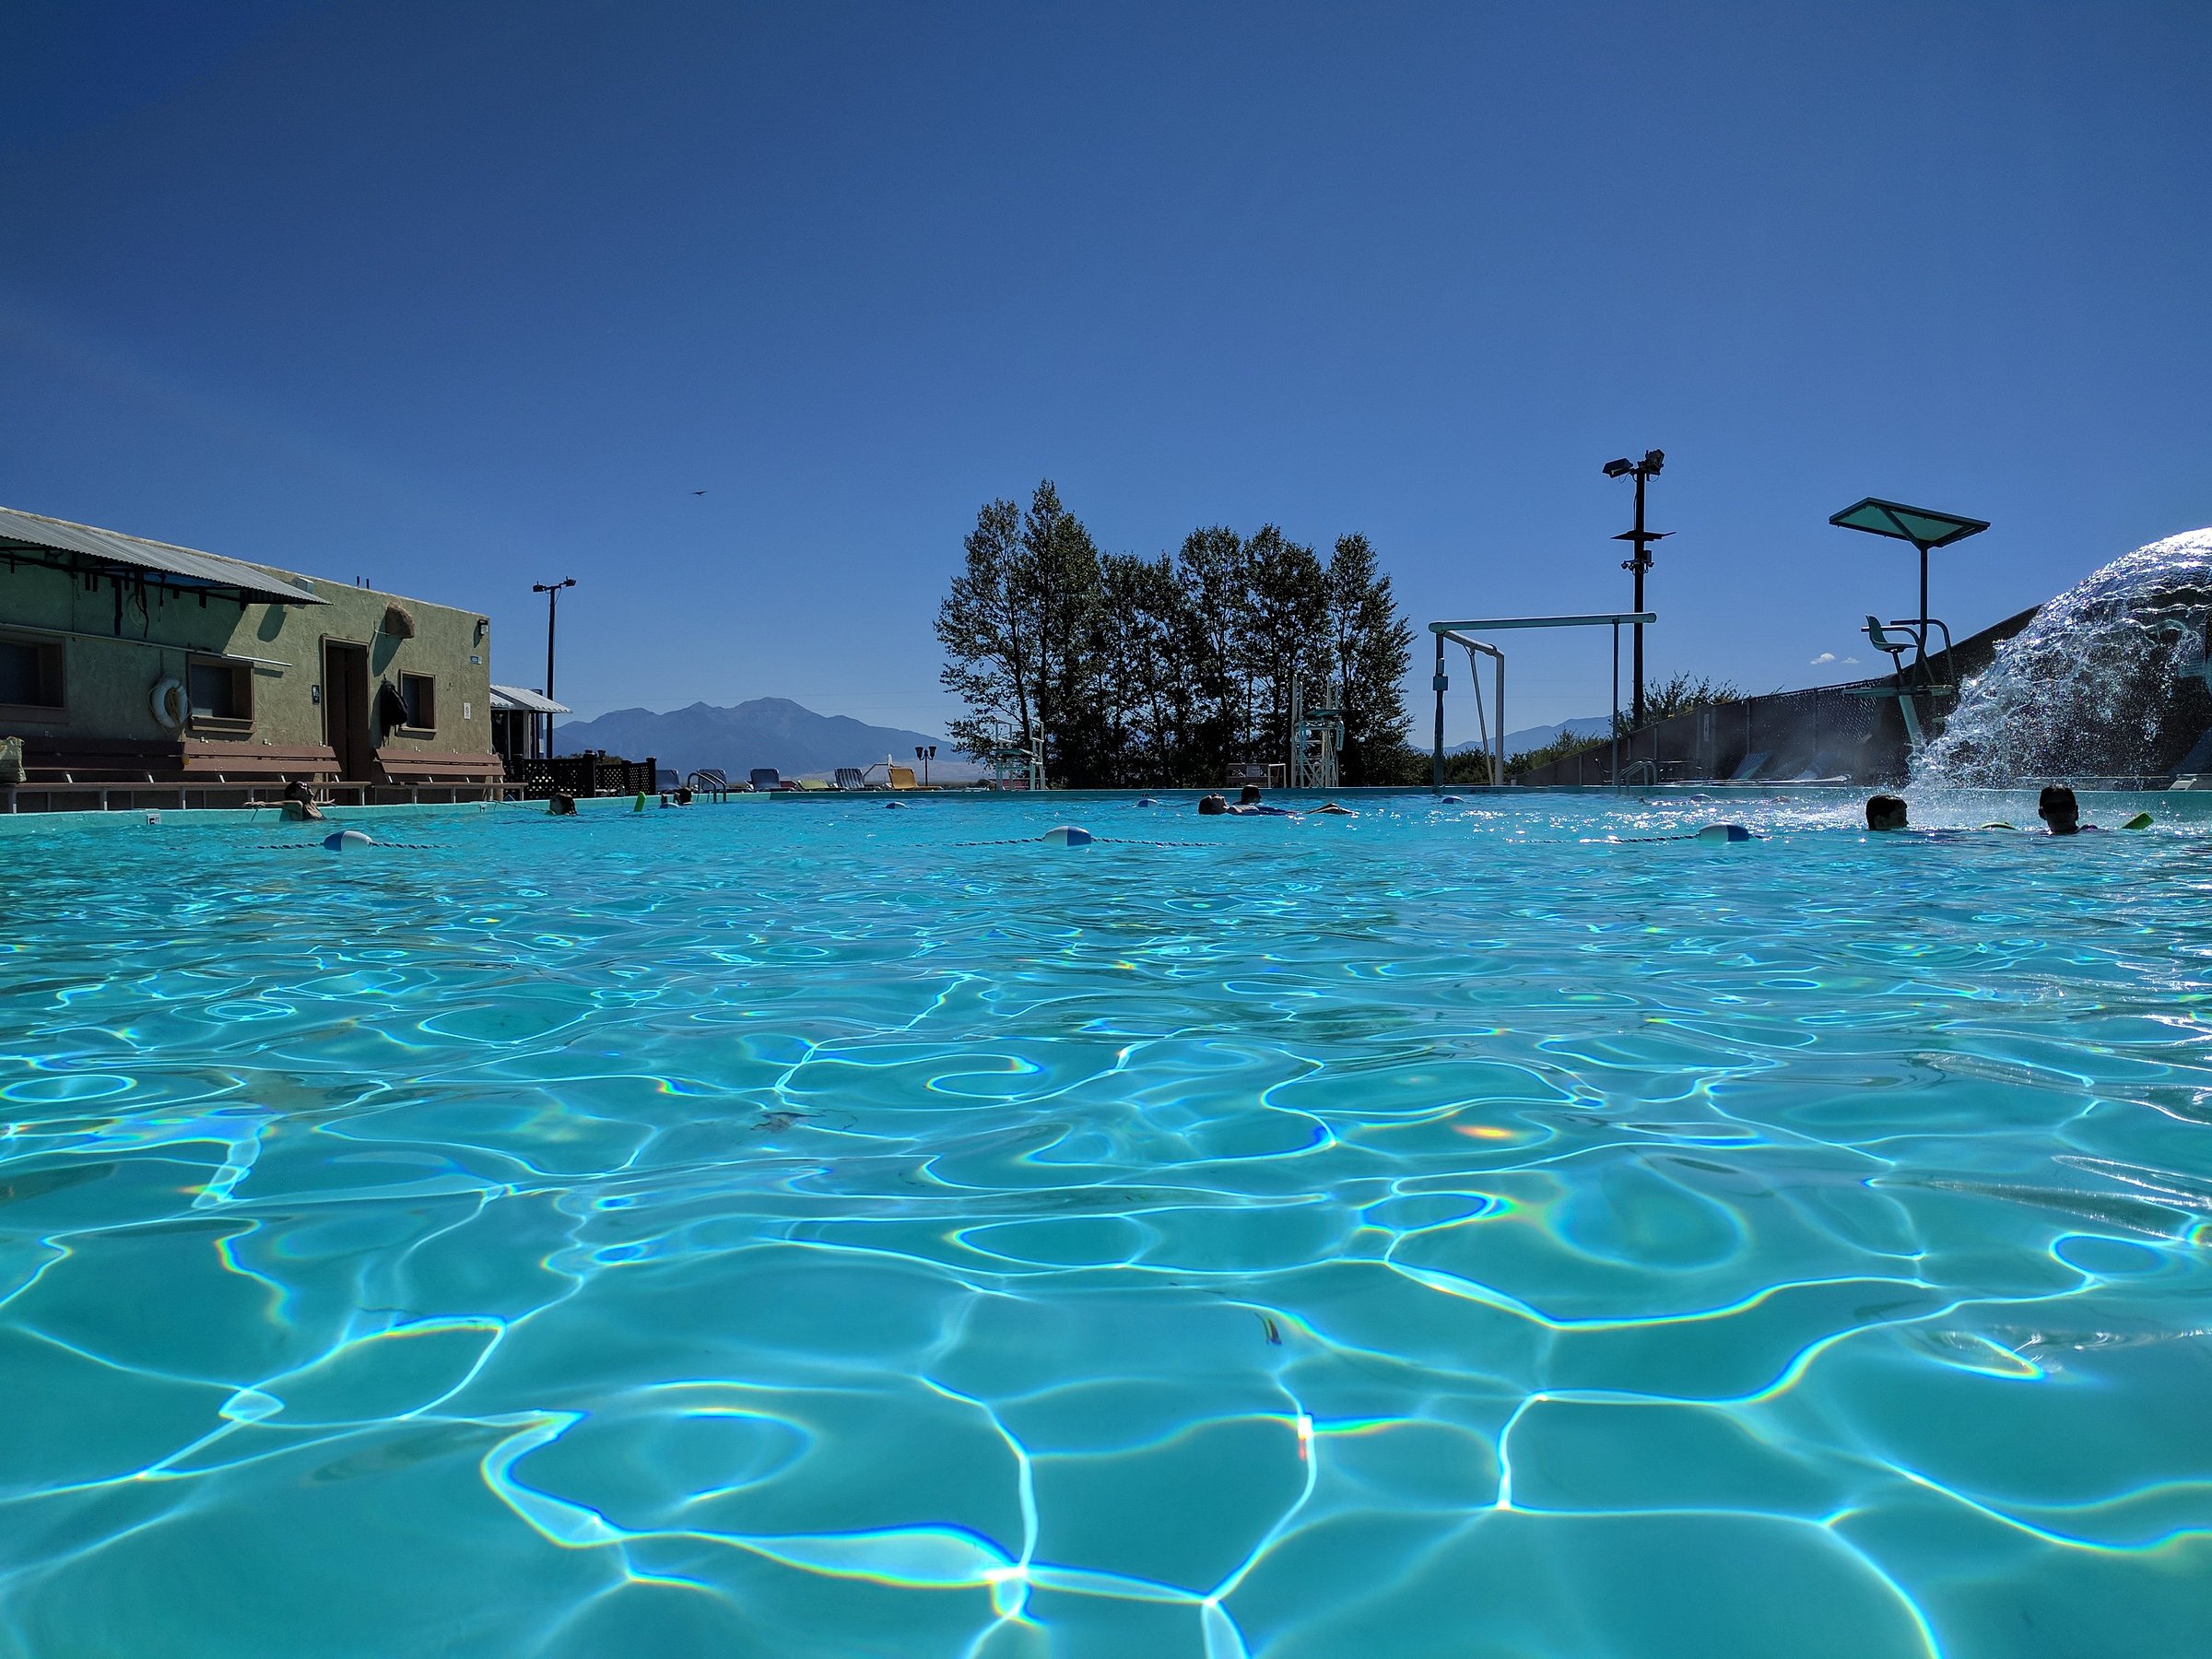 Hooper Pool at Sand Dunes Recreation